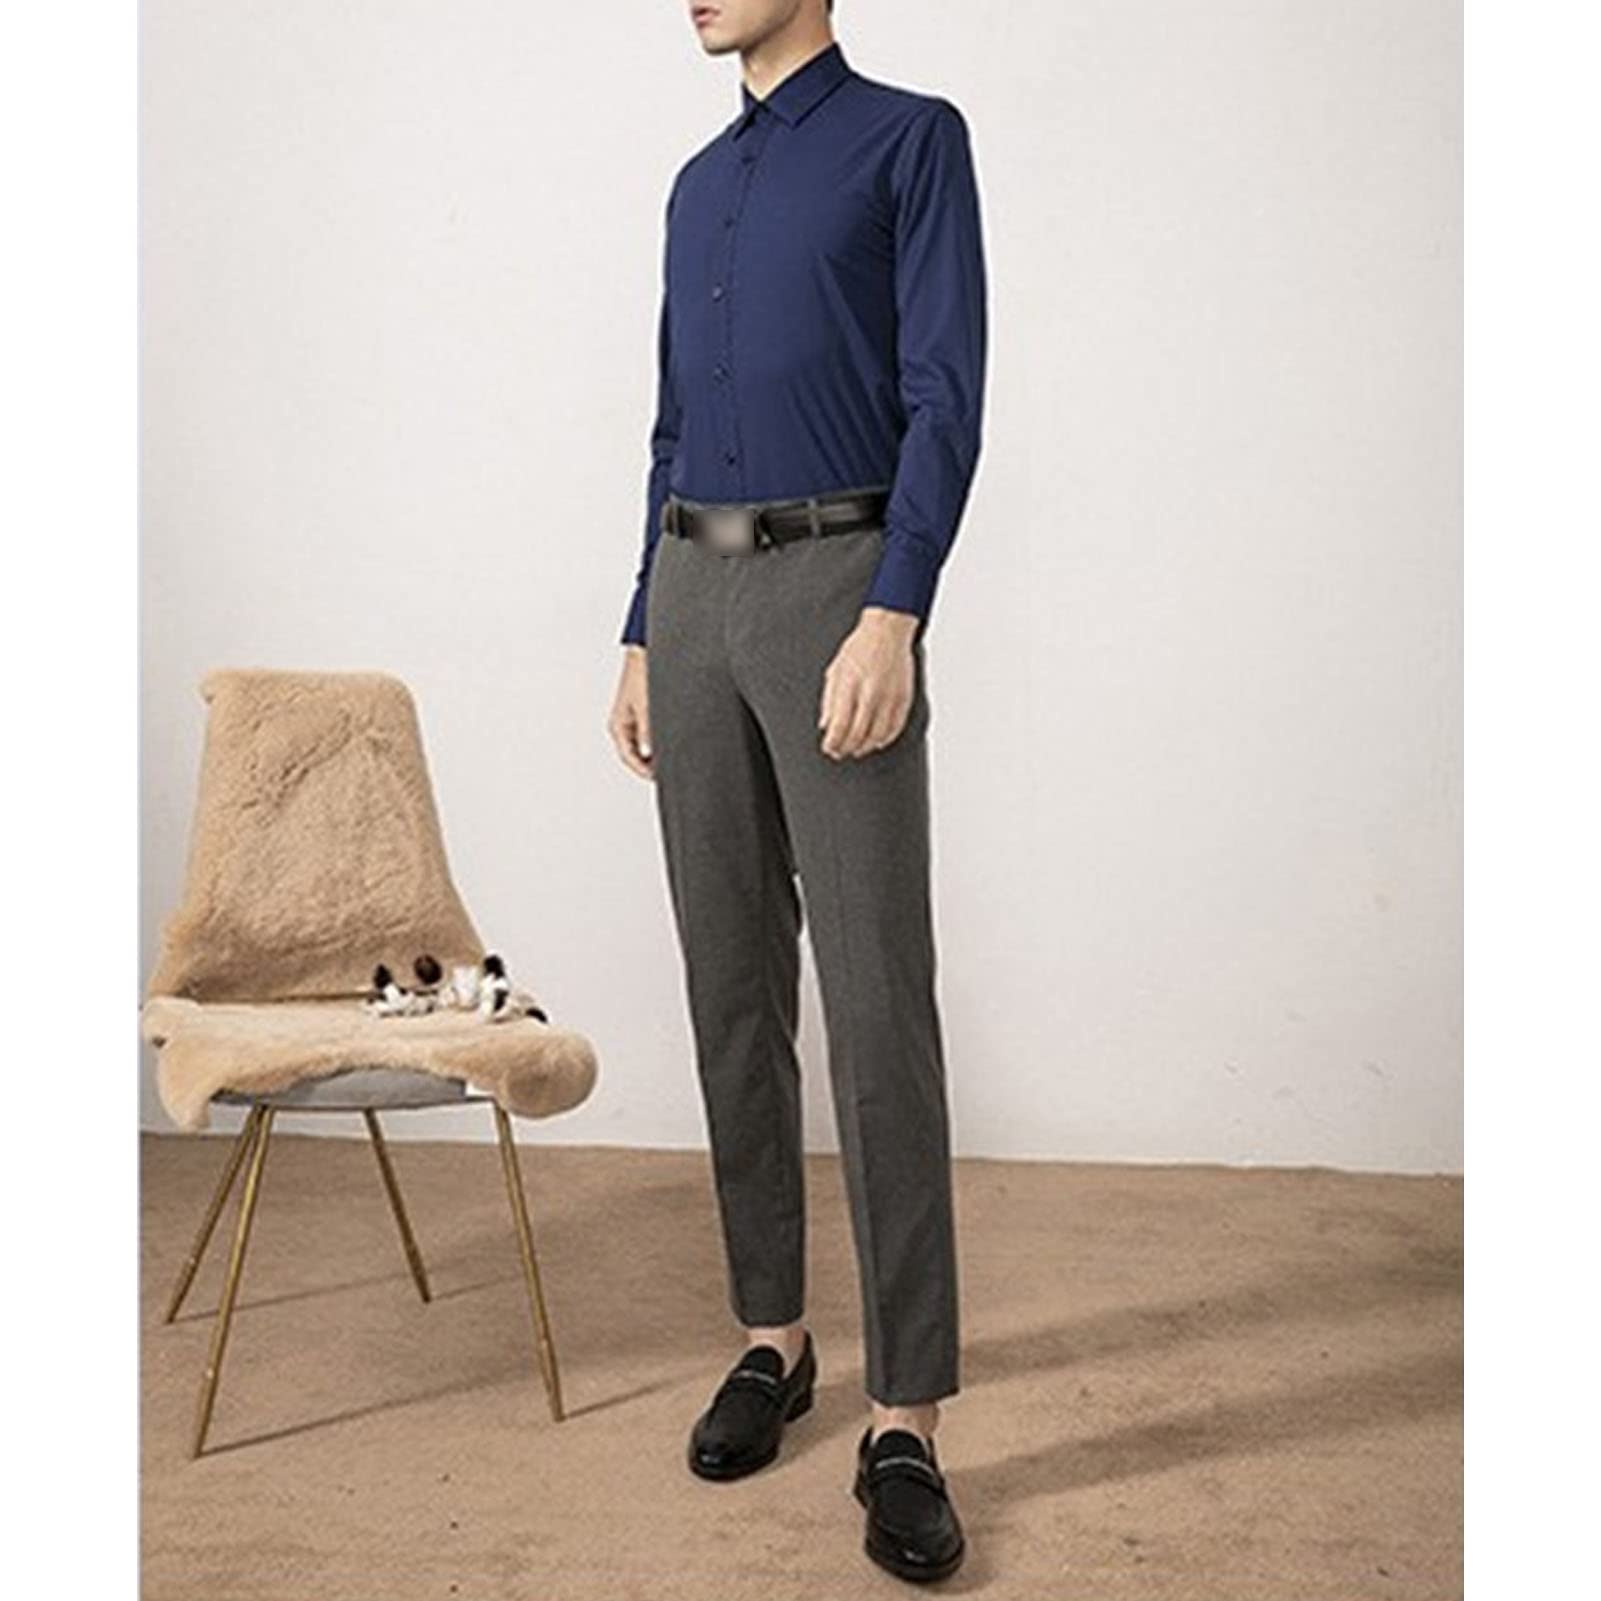 Maiyifu-GJ Men Casual Wrinkle Free Dress Shirt Regular Fit Button Down Shirts Solid Slim Fit Long Sleeve Business Shirts (Dark Blue,Large)